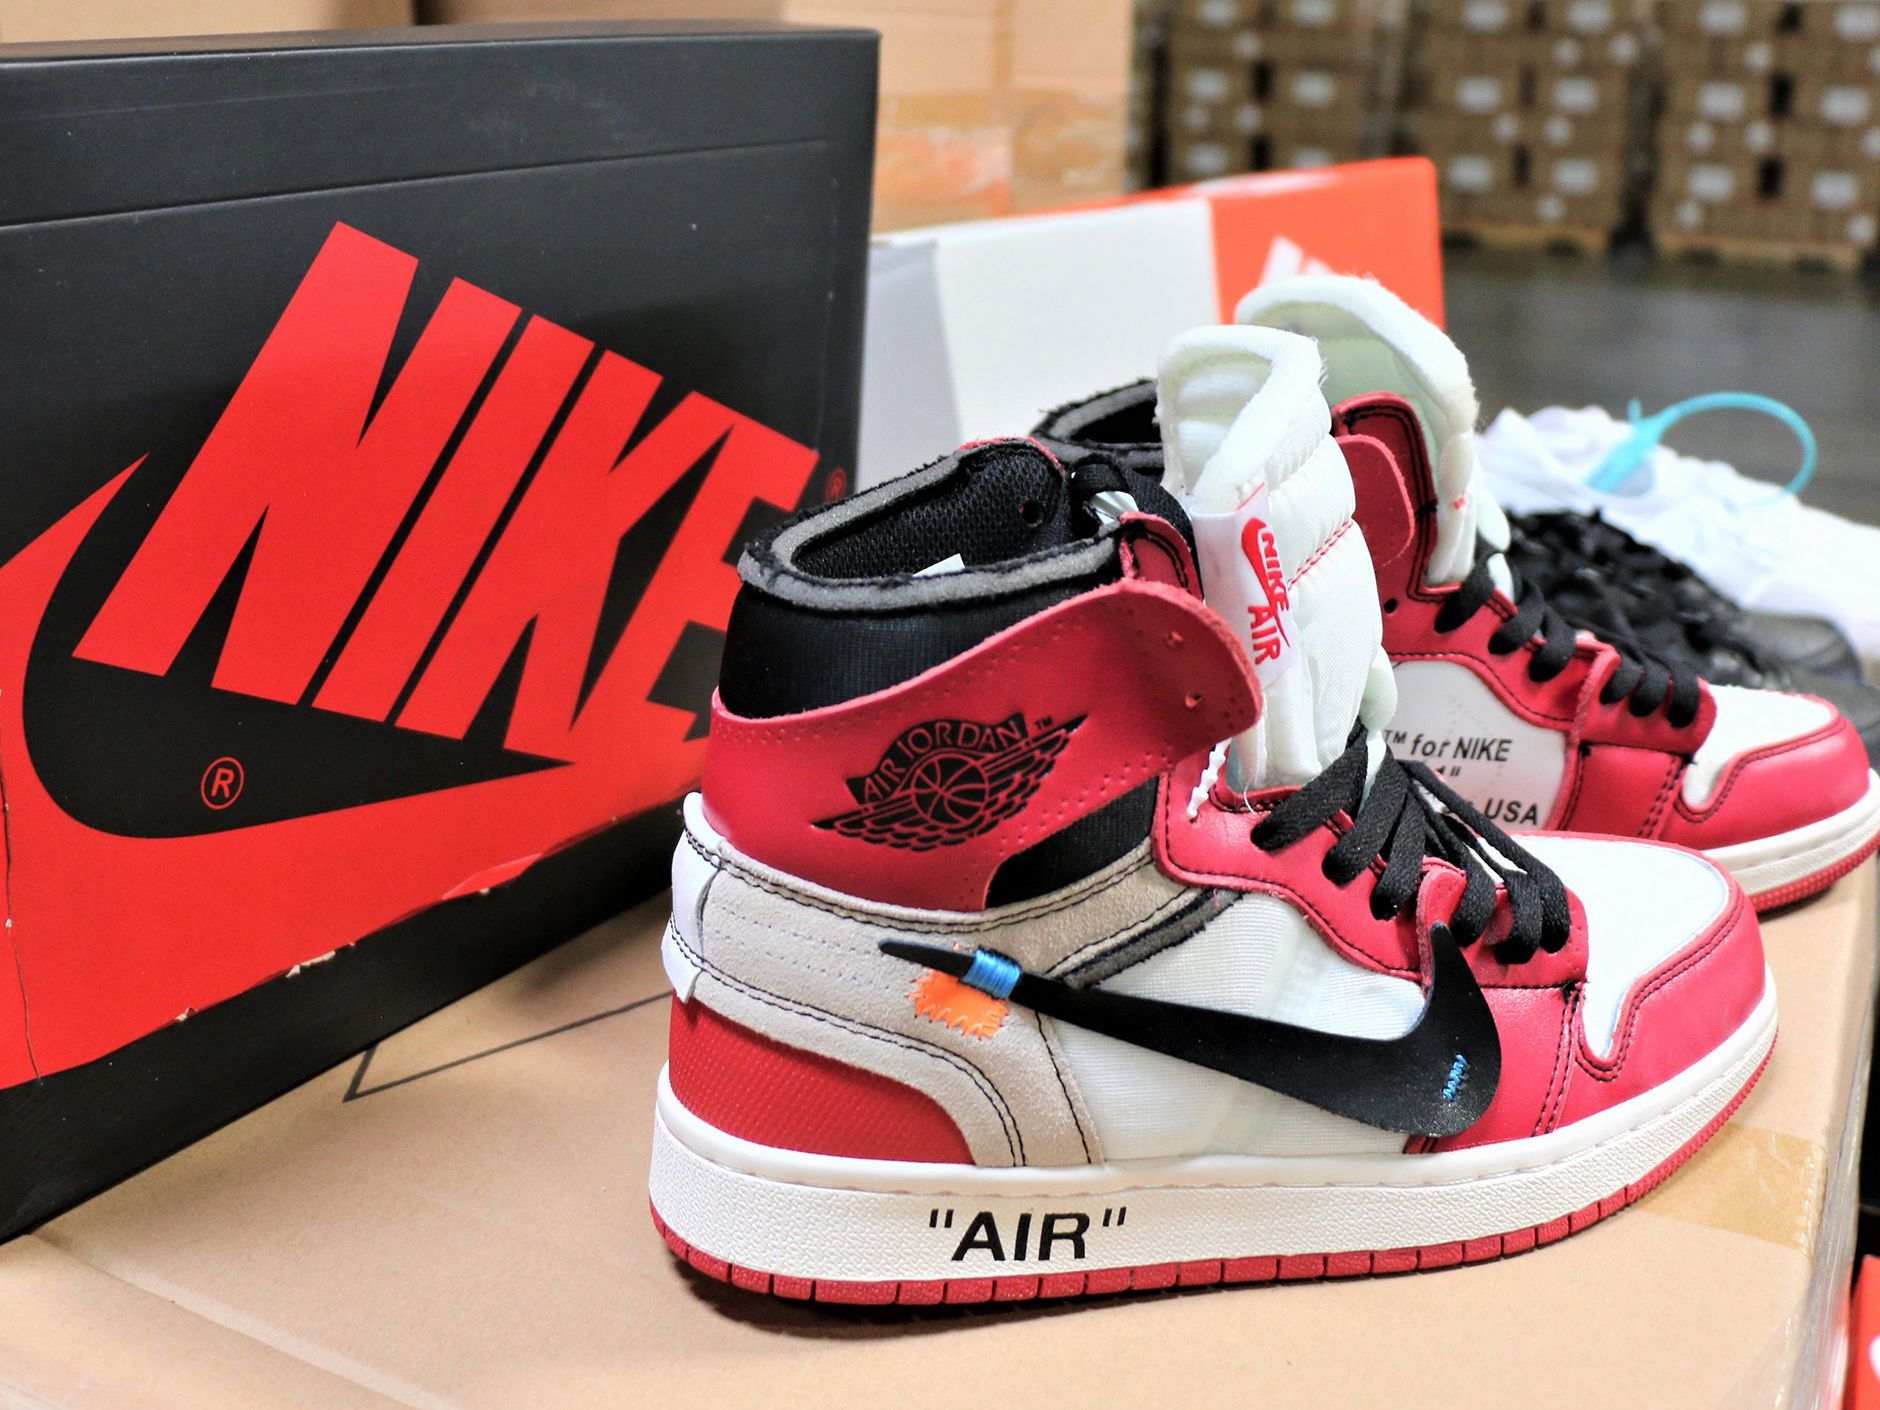 More than 14,000 fake Nikes seized in | CNN